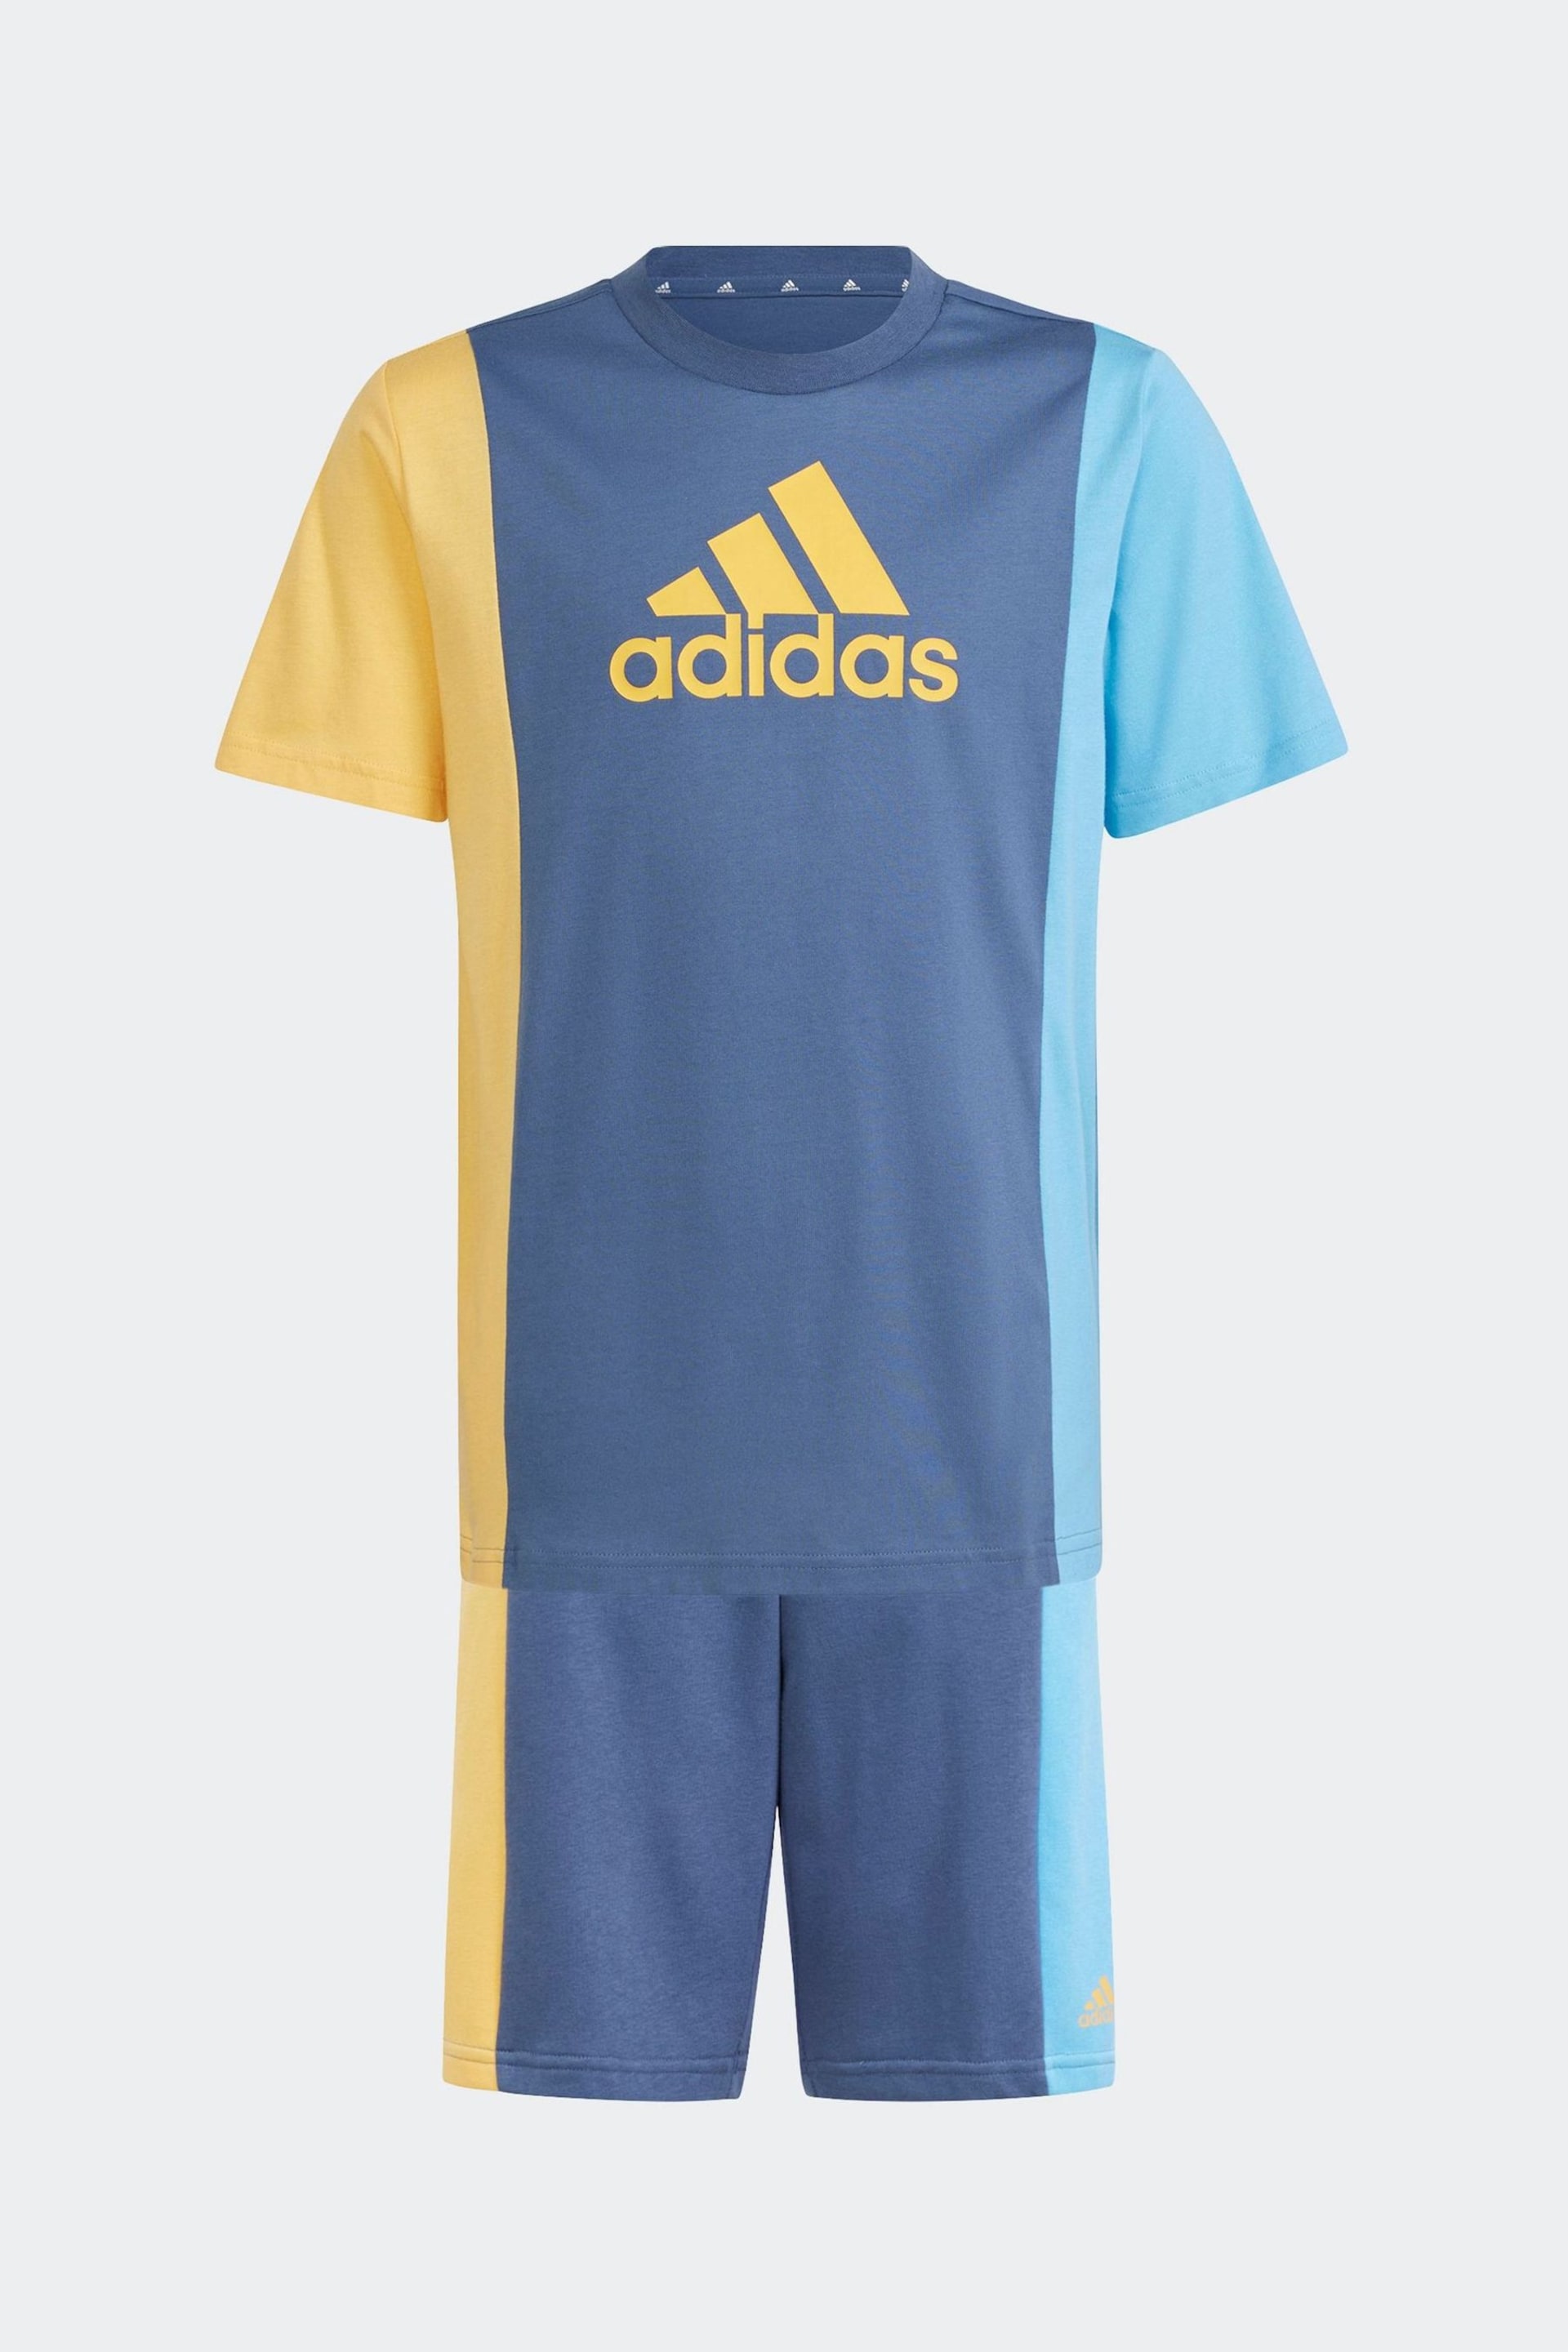 adidas Blue Kids Sportswear Essentials Colourblock T-Shirts Set - Image 1 of 6